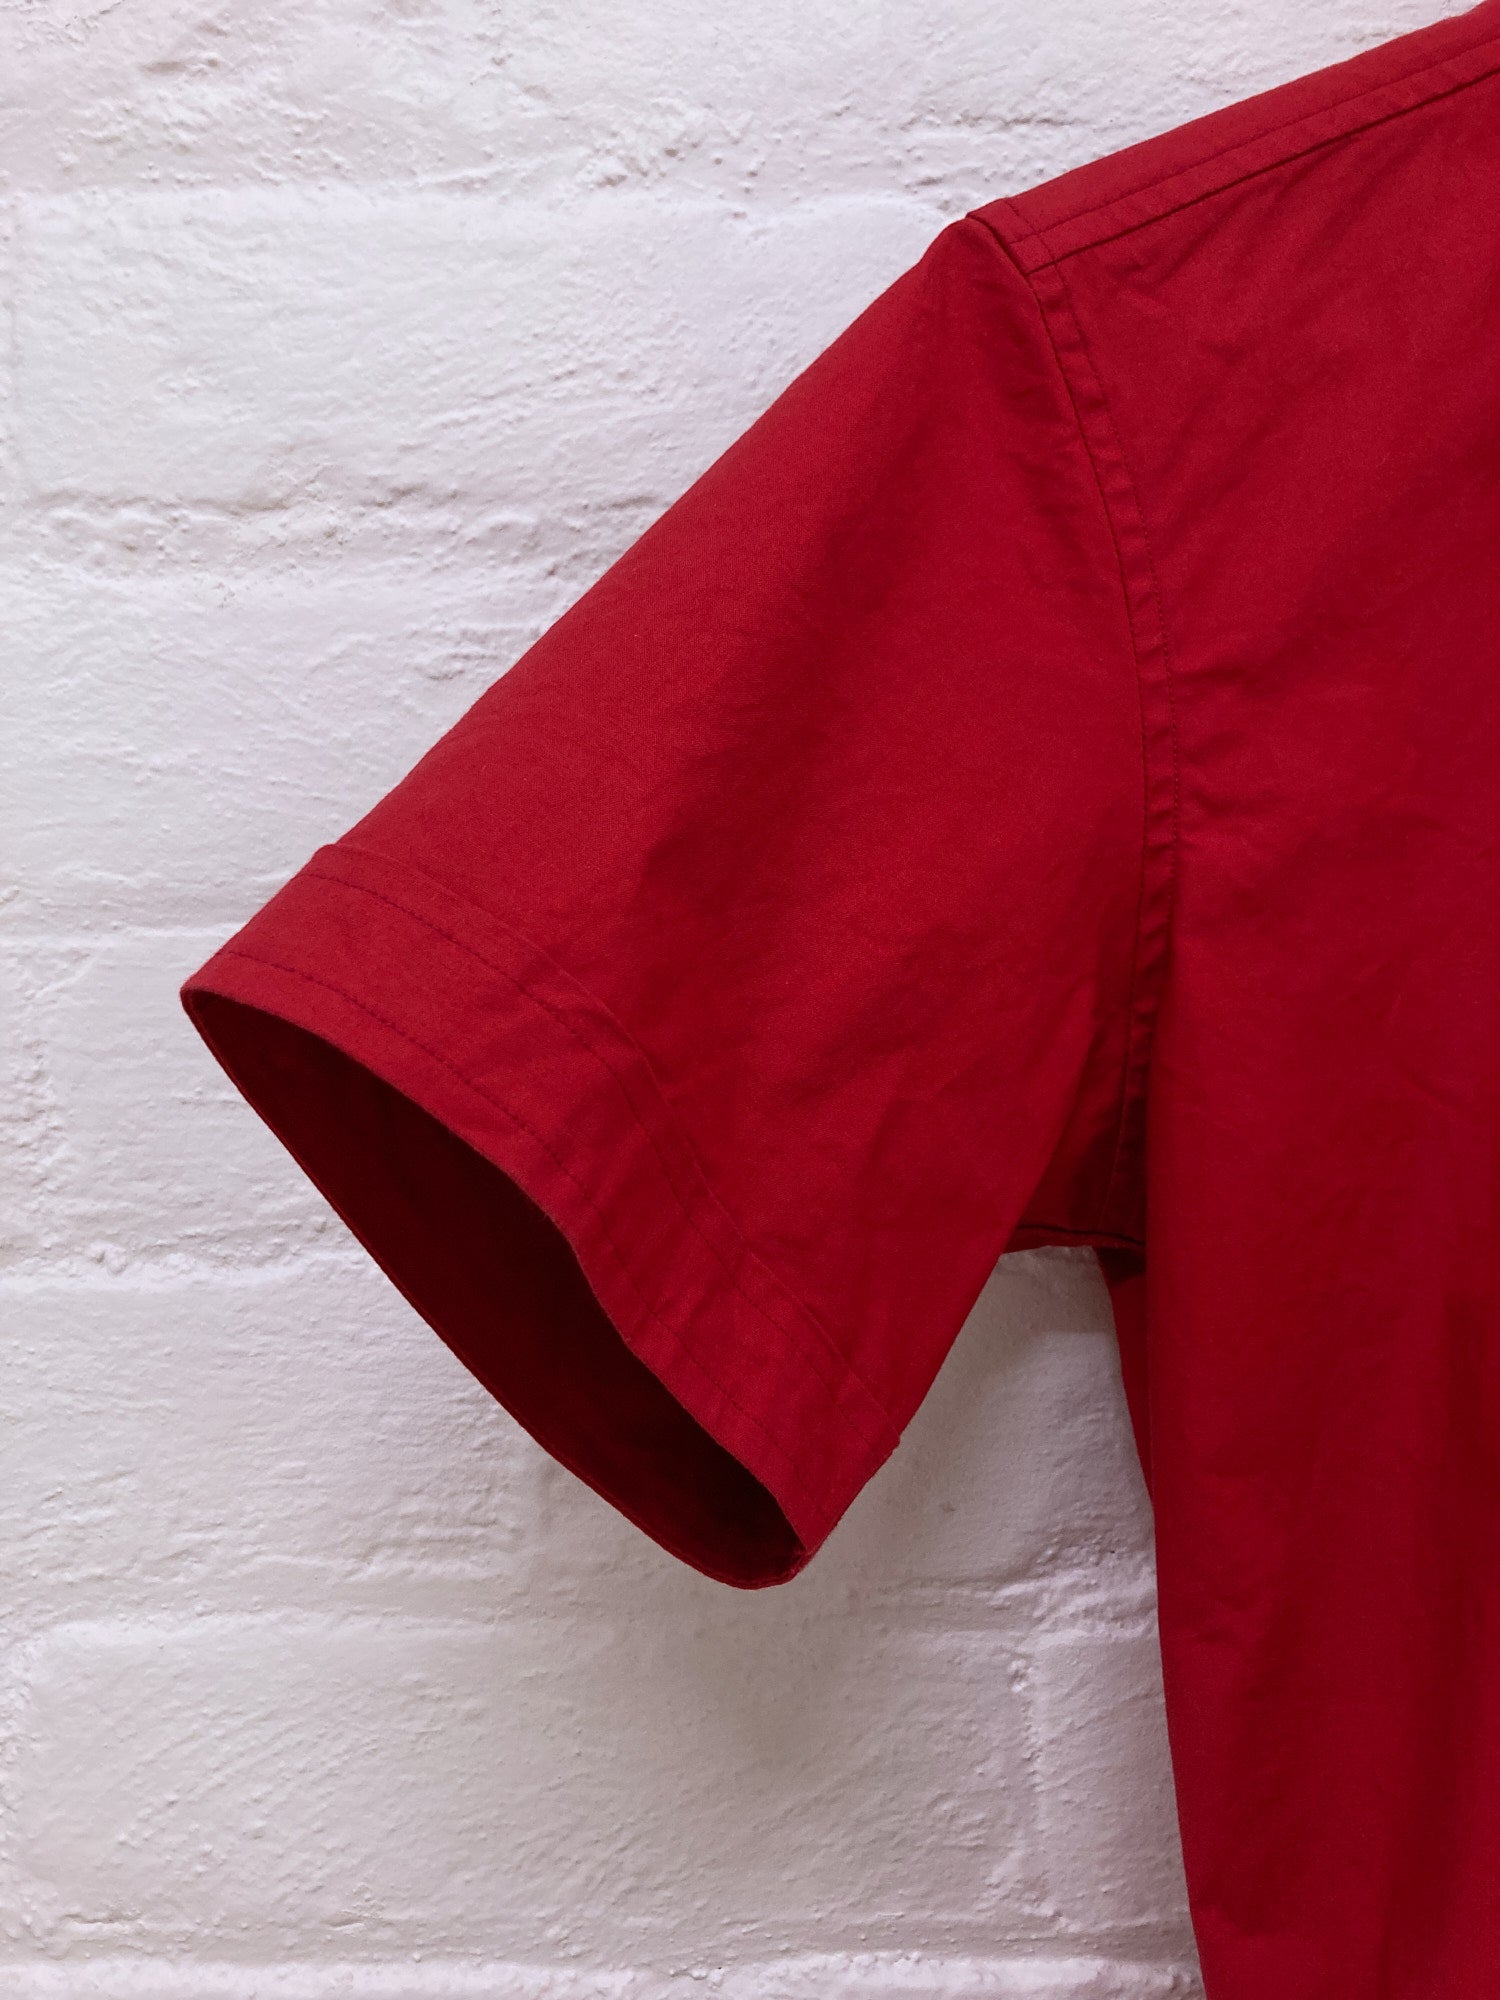 Jean Paul Gaultier Homme Objet red stretch cotton short sleeve shirt - size 46